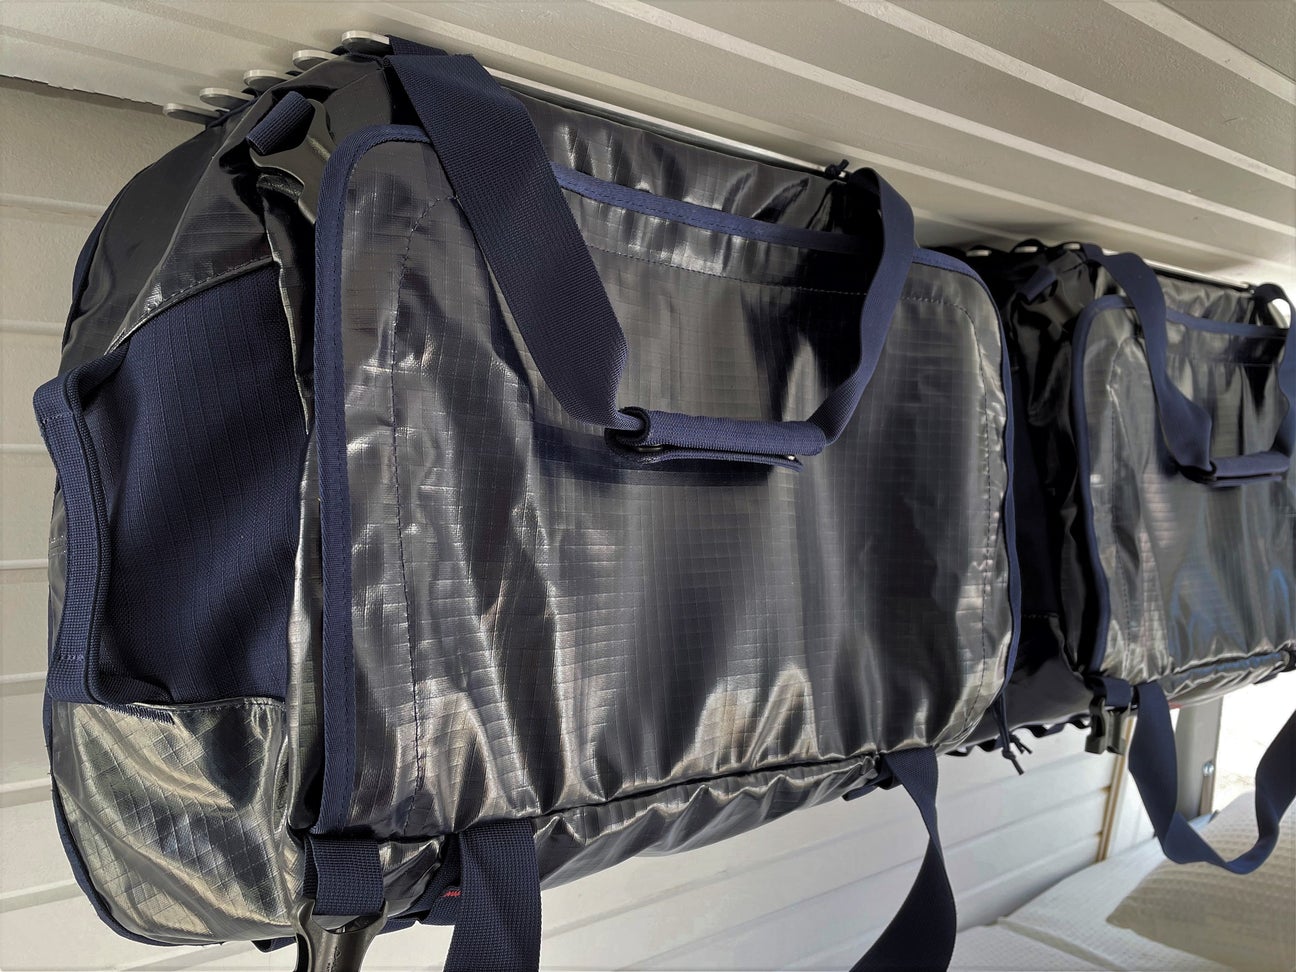 Aspen Frontier duffel rack holding a 40-liter Patagonia duffel bag.